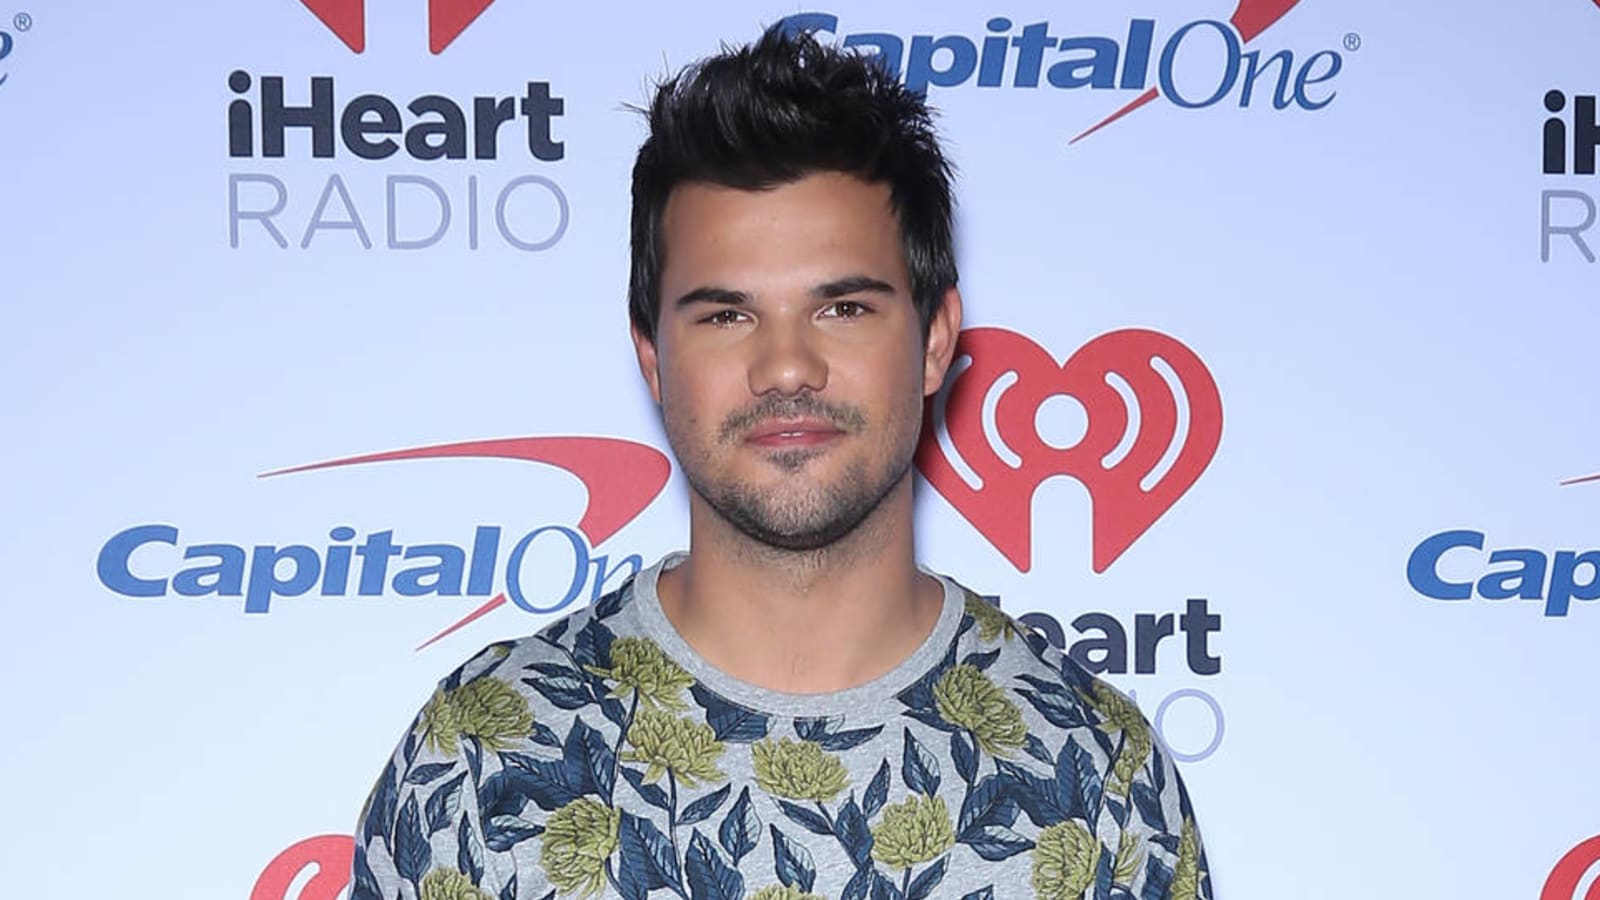 Taylor Lautner on 'Twilight' fame: 'I was scared'